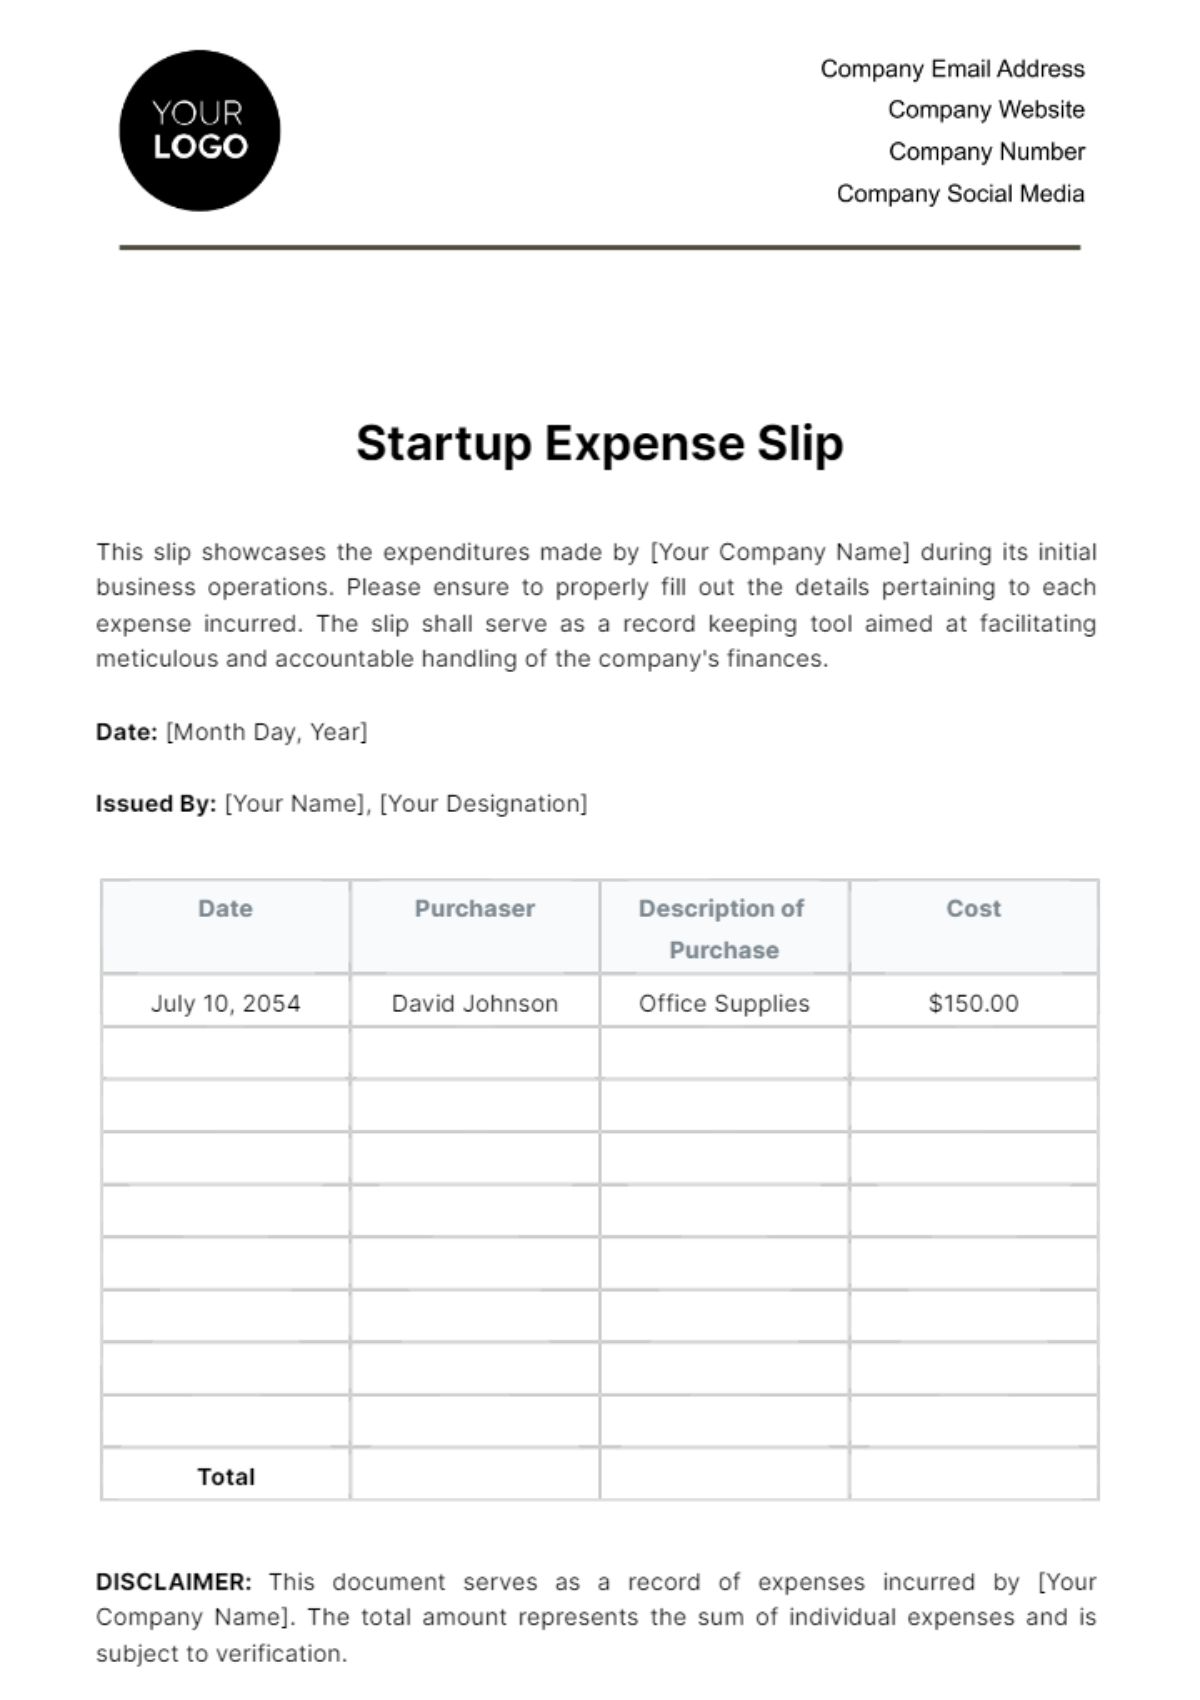 Startup Expense Slip Template